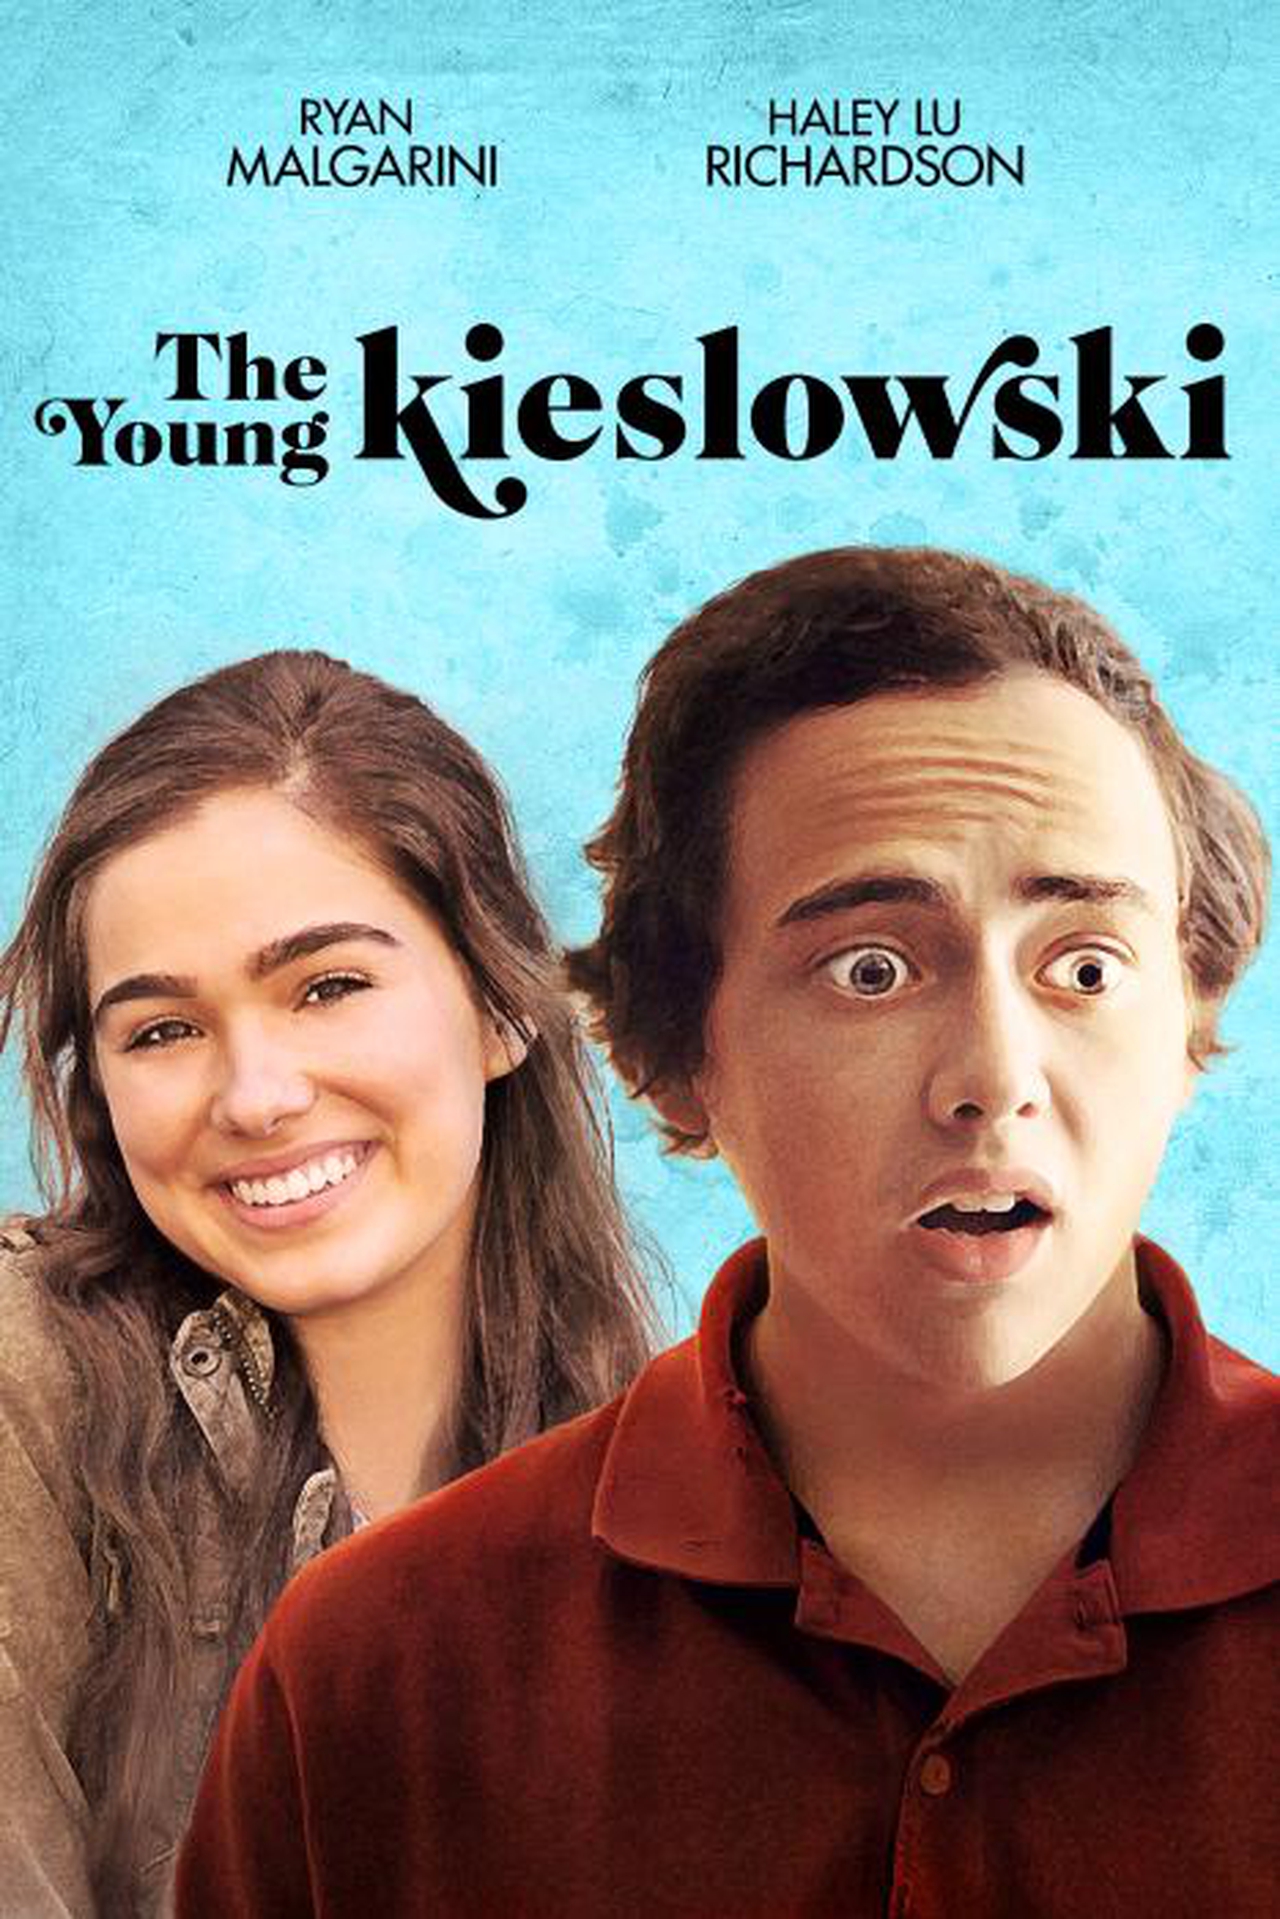 هیلی لو ریچاردسون در صحنه فیلم سینمایی The Young Kieslowski